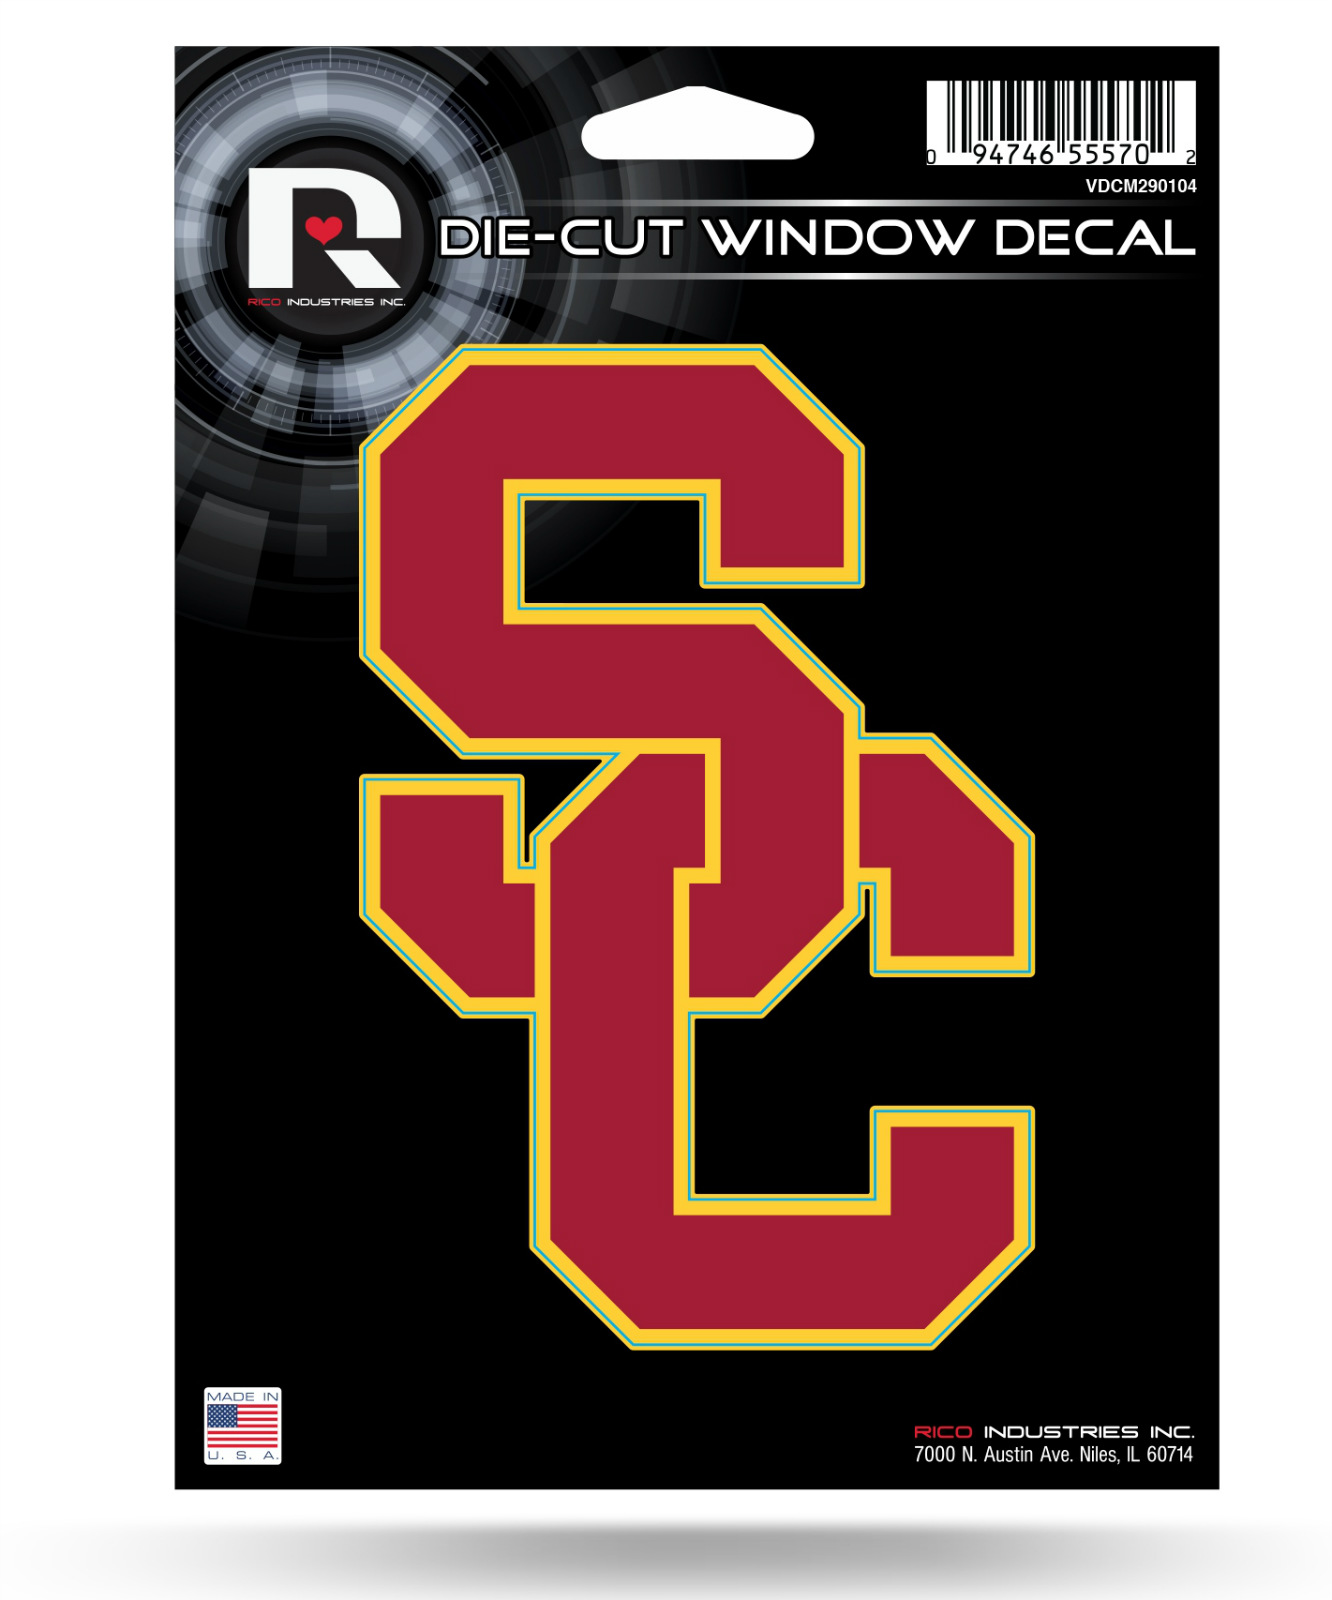 Usc Trojans 5 Die Cut Decal Vinyl Sticker University Of Southern California 719104561859 Ebay 